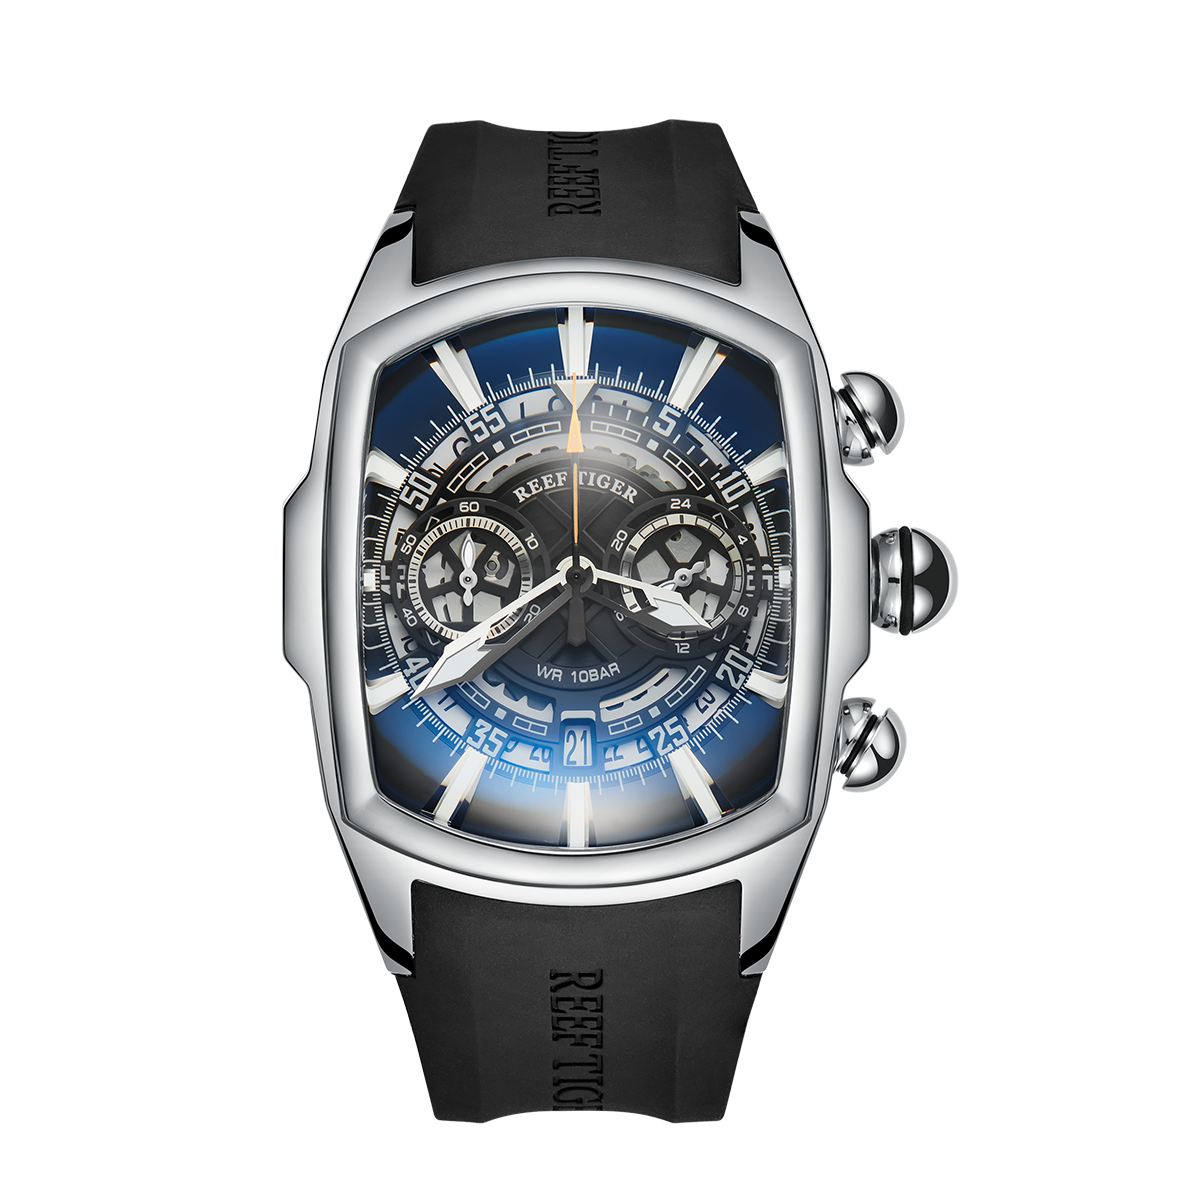 Luxury Reef Tiger Aurora Tank VK Chronograph Sport Watches for Mens